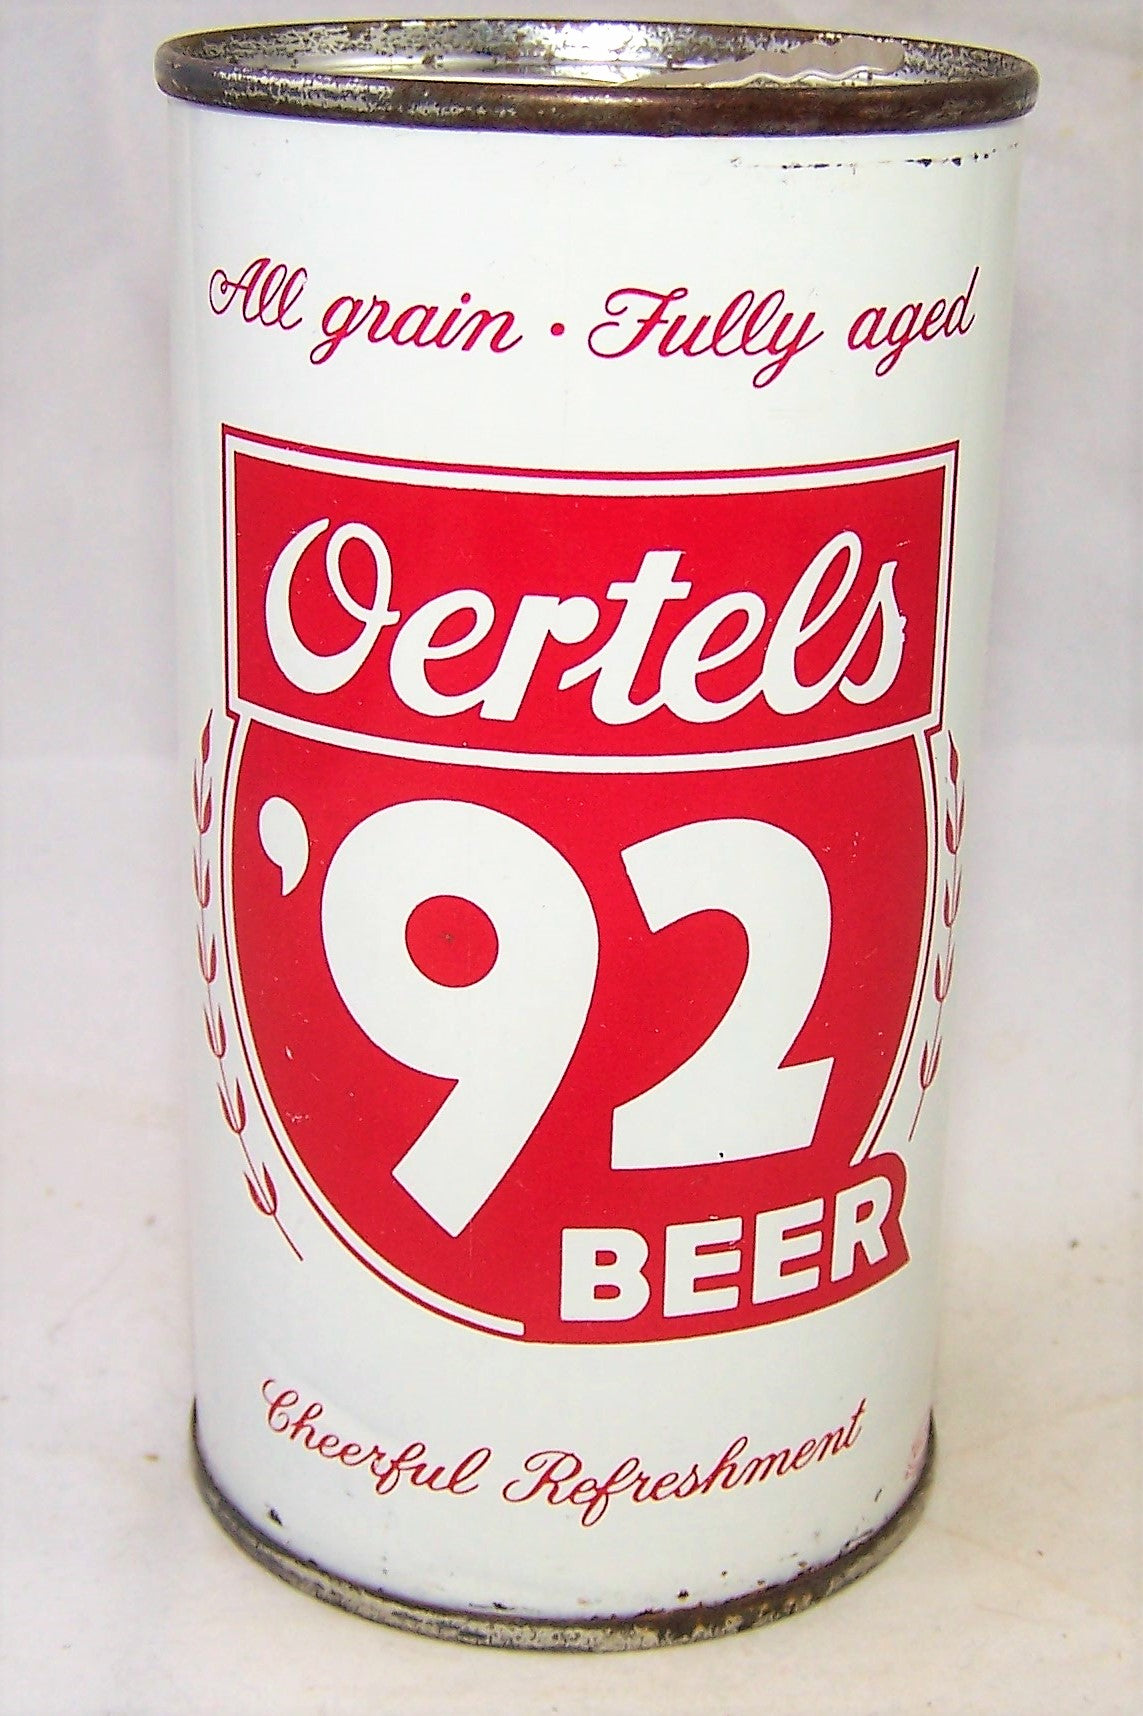 Oertels 92 Beer "Cheerful Refreshment" USBC II 98-39, Grade 1